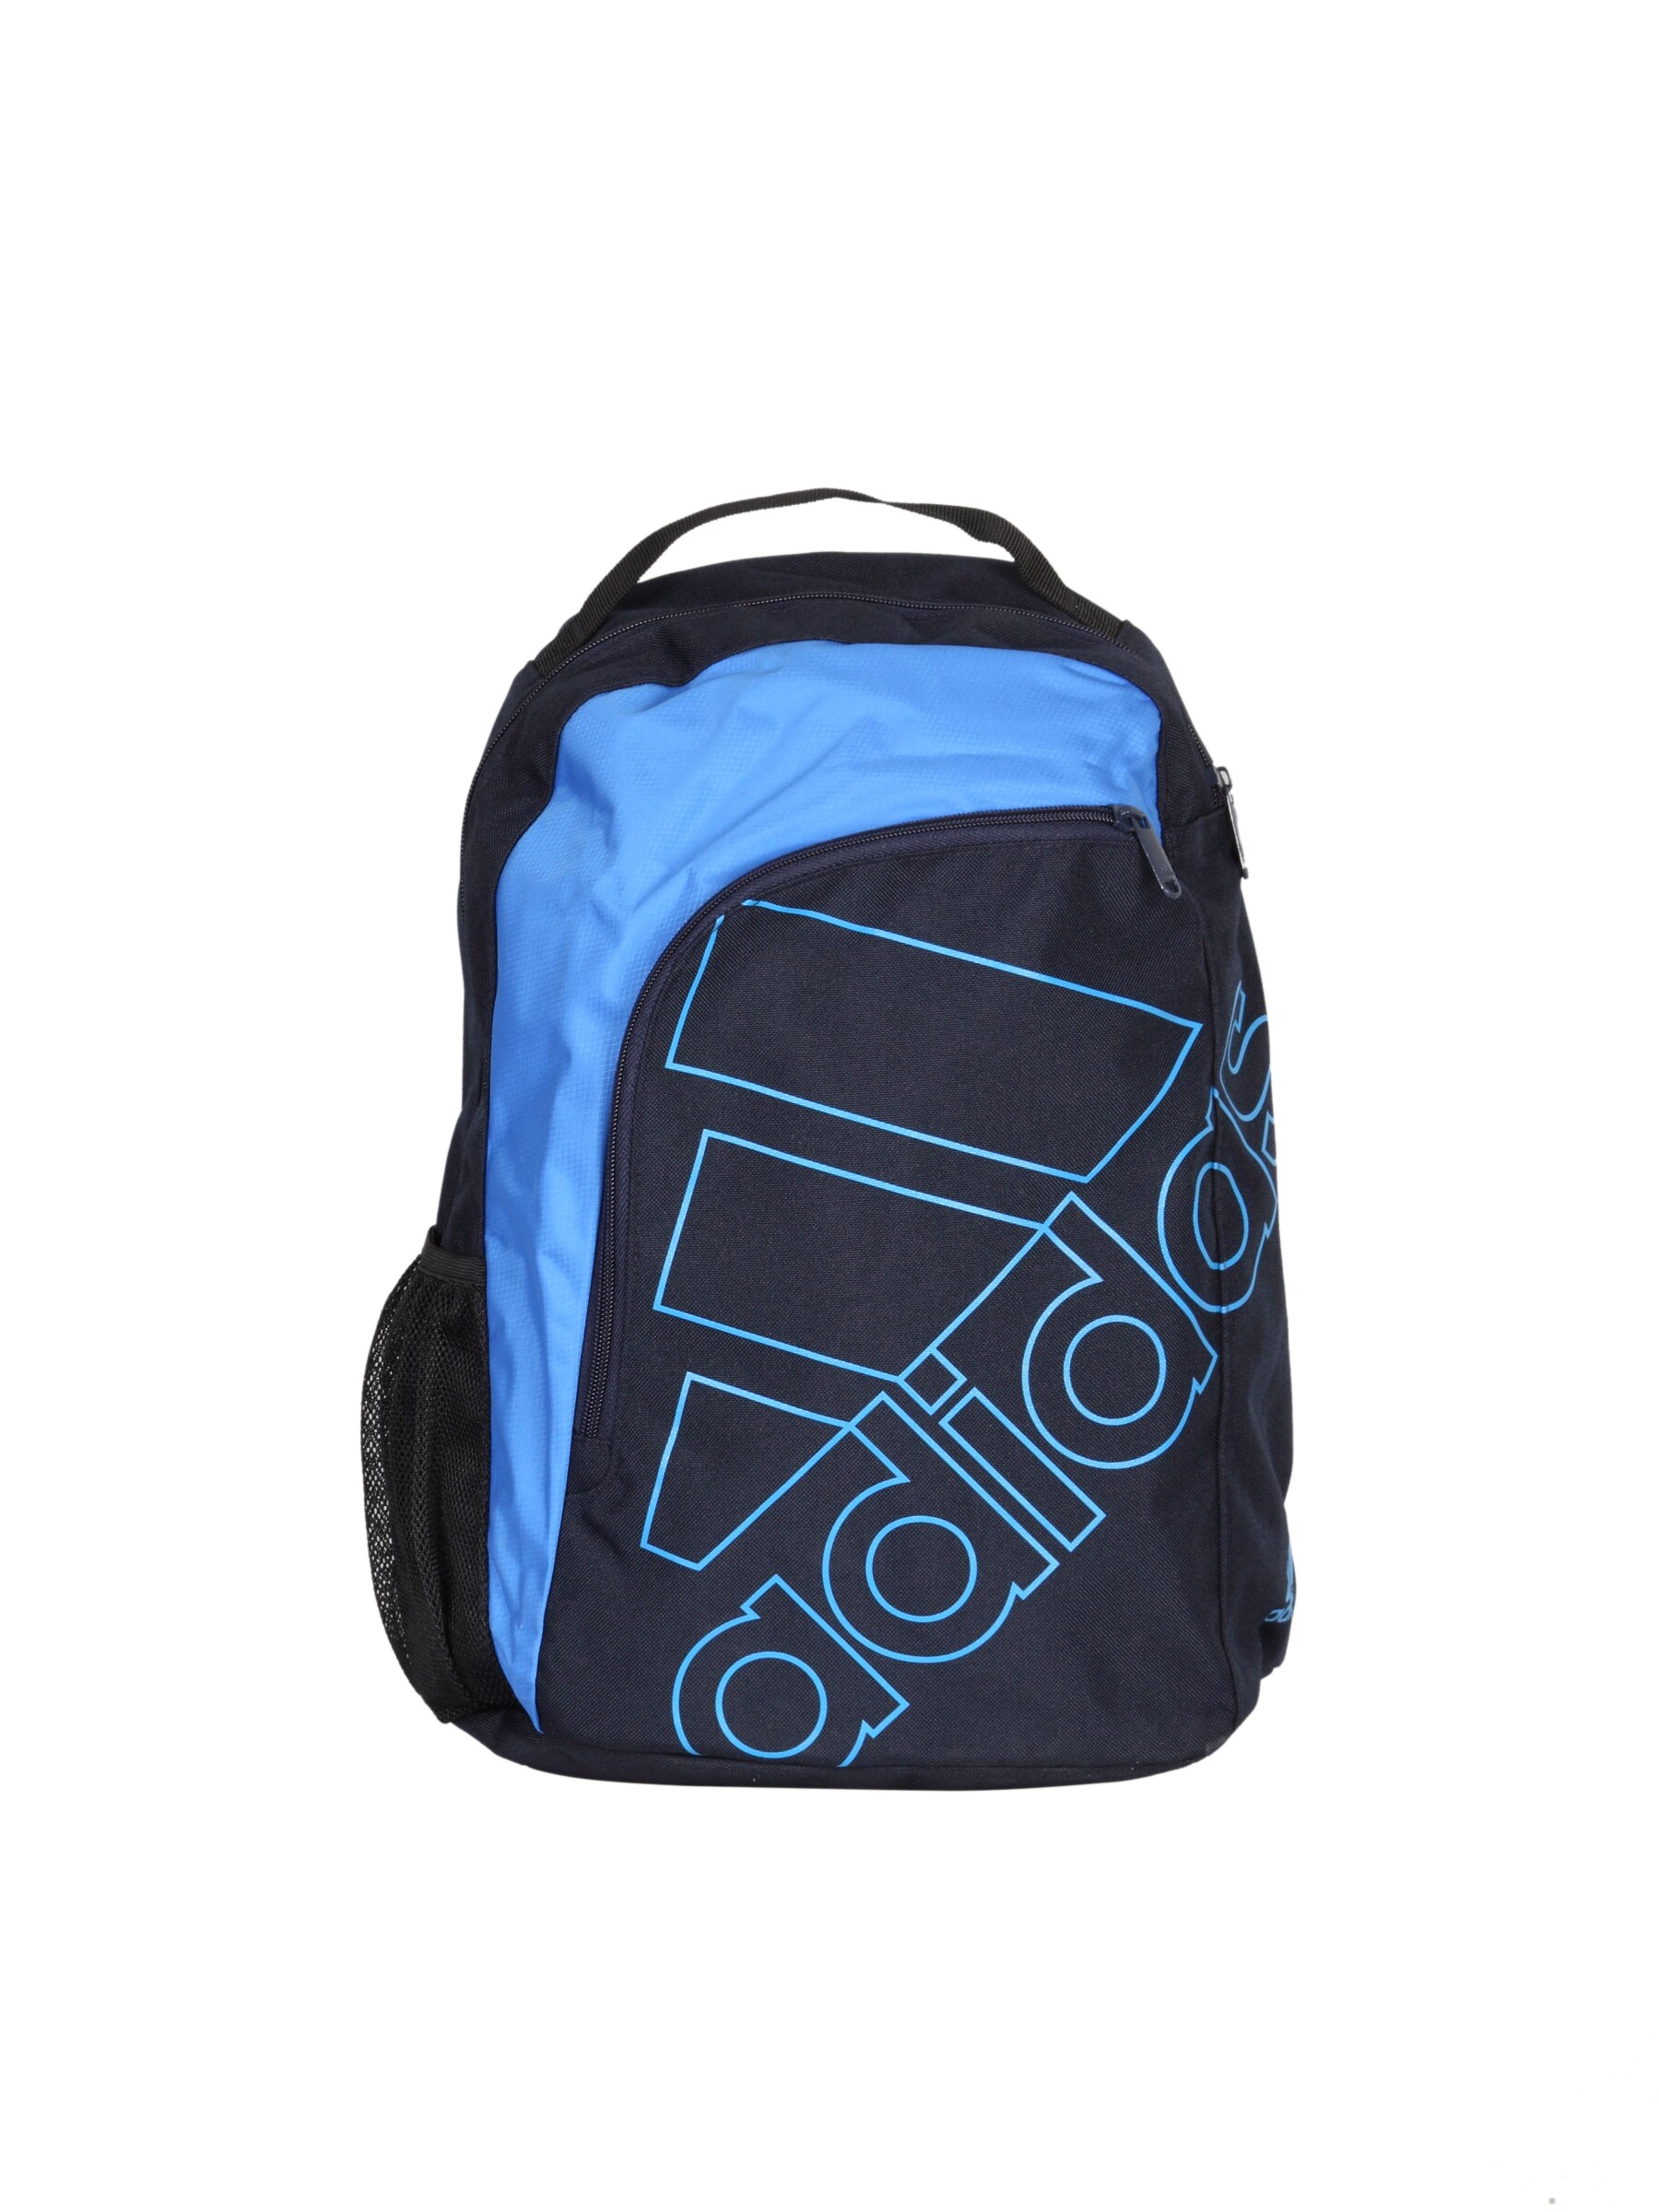 ADIDAS Unisex Ess BP Dark Navy Blue Backpack